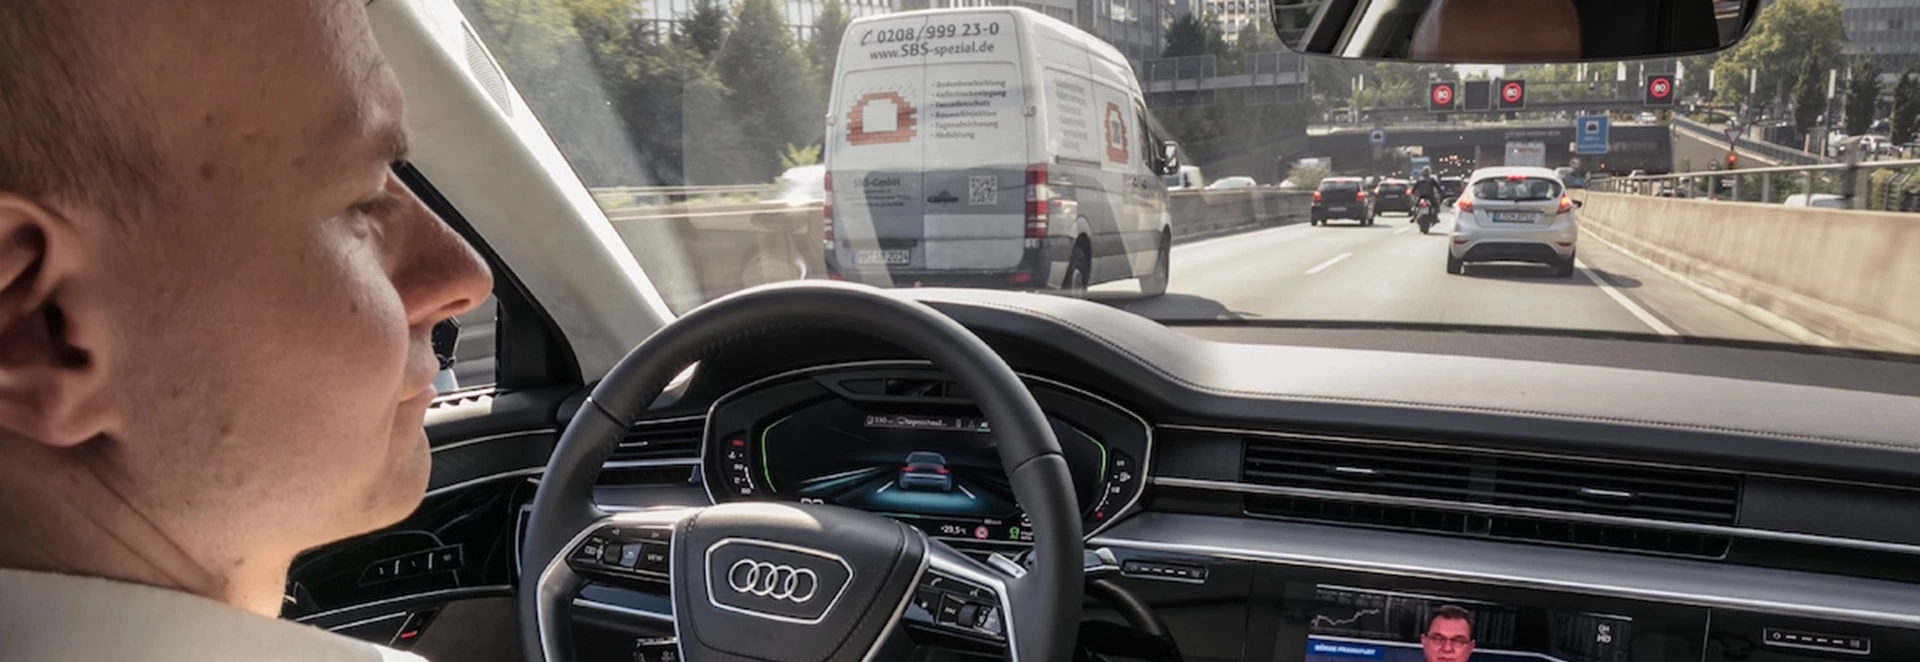 We try Audi's new traffic jam assist 